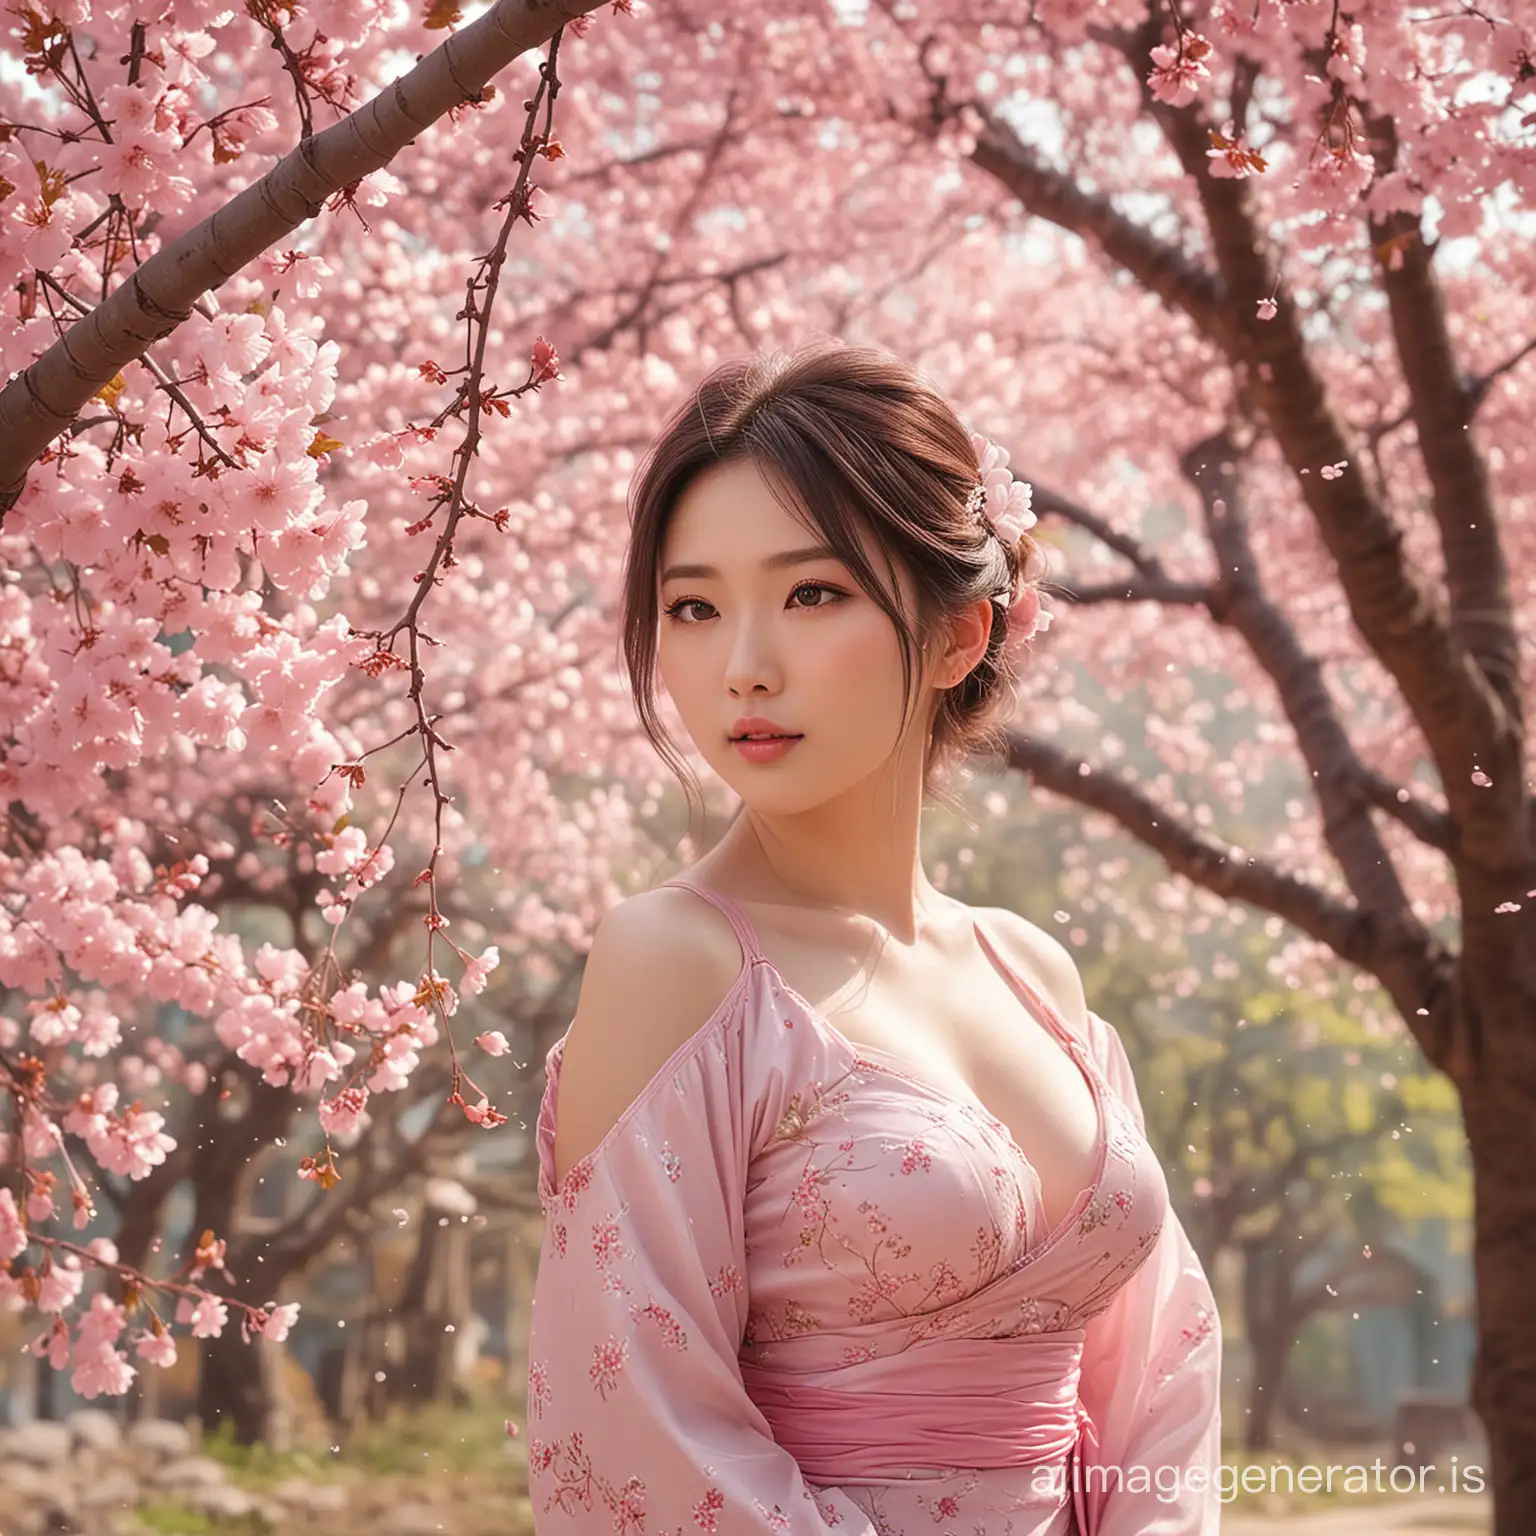 Ethereal-Fantasy-Portrait-Korean-Woman-Amidst-Cherry-Blossoms